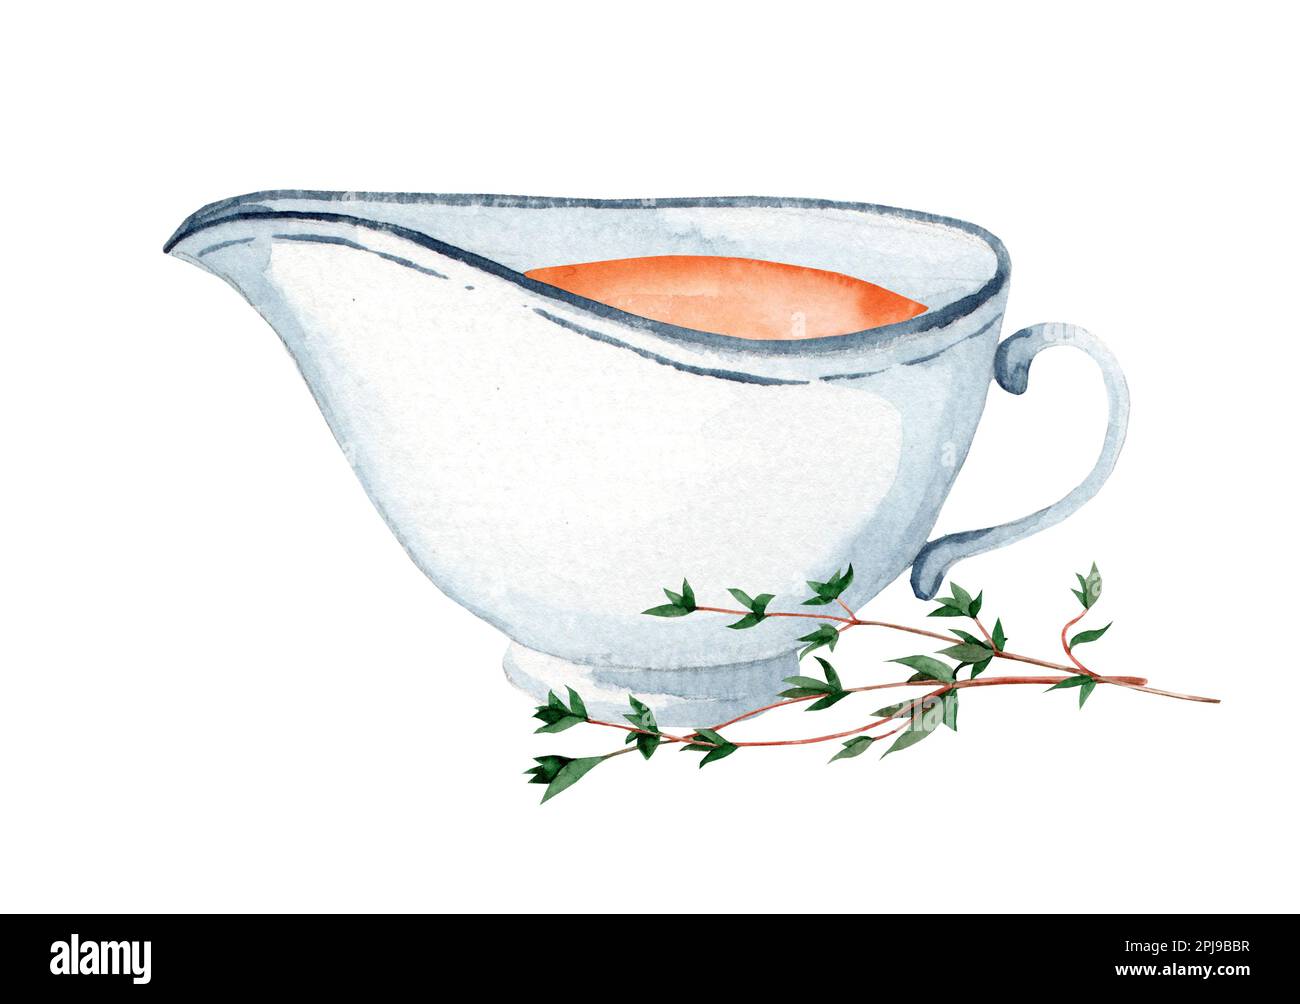 https://c8.alamy.com/comp/2PJ9BBR/rustic-white-ceramic-vintage-gravy-boat-sauce-with-thyme-watercolor-hand-drawn-illustration-2PJ9BBR.jpg